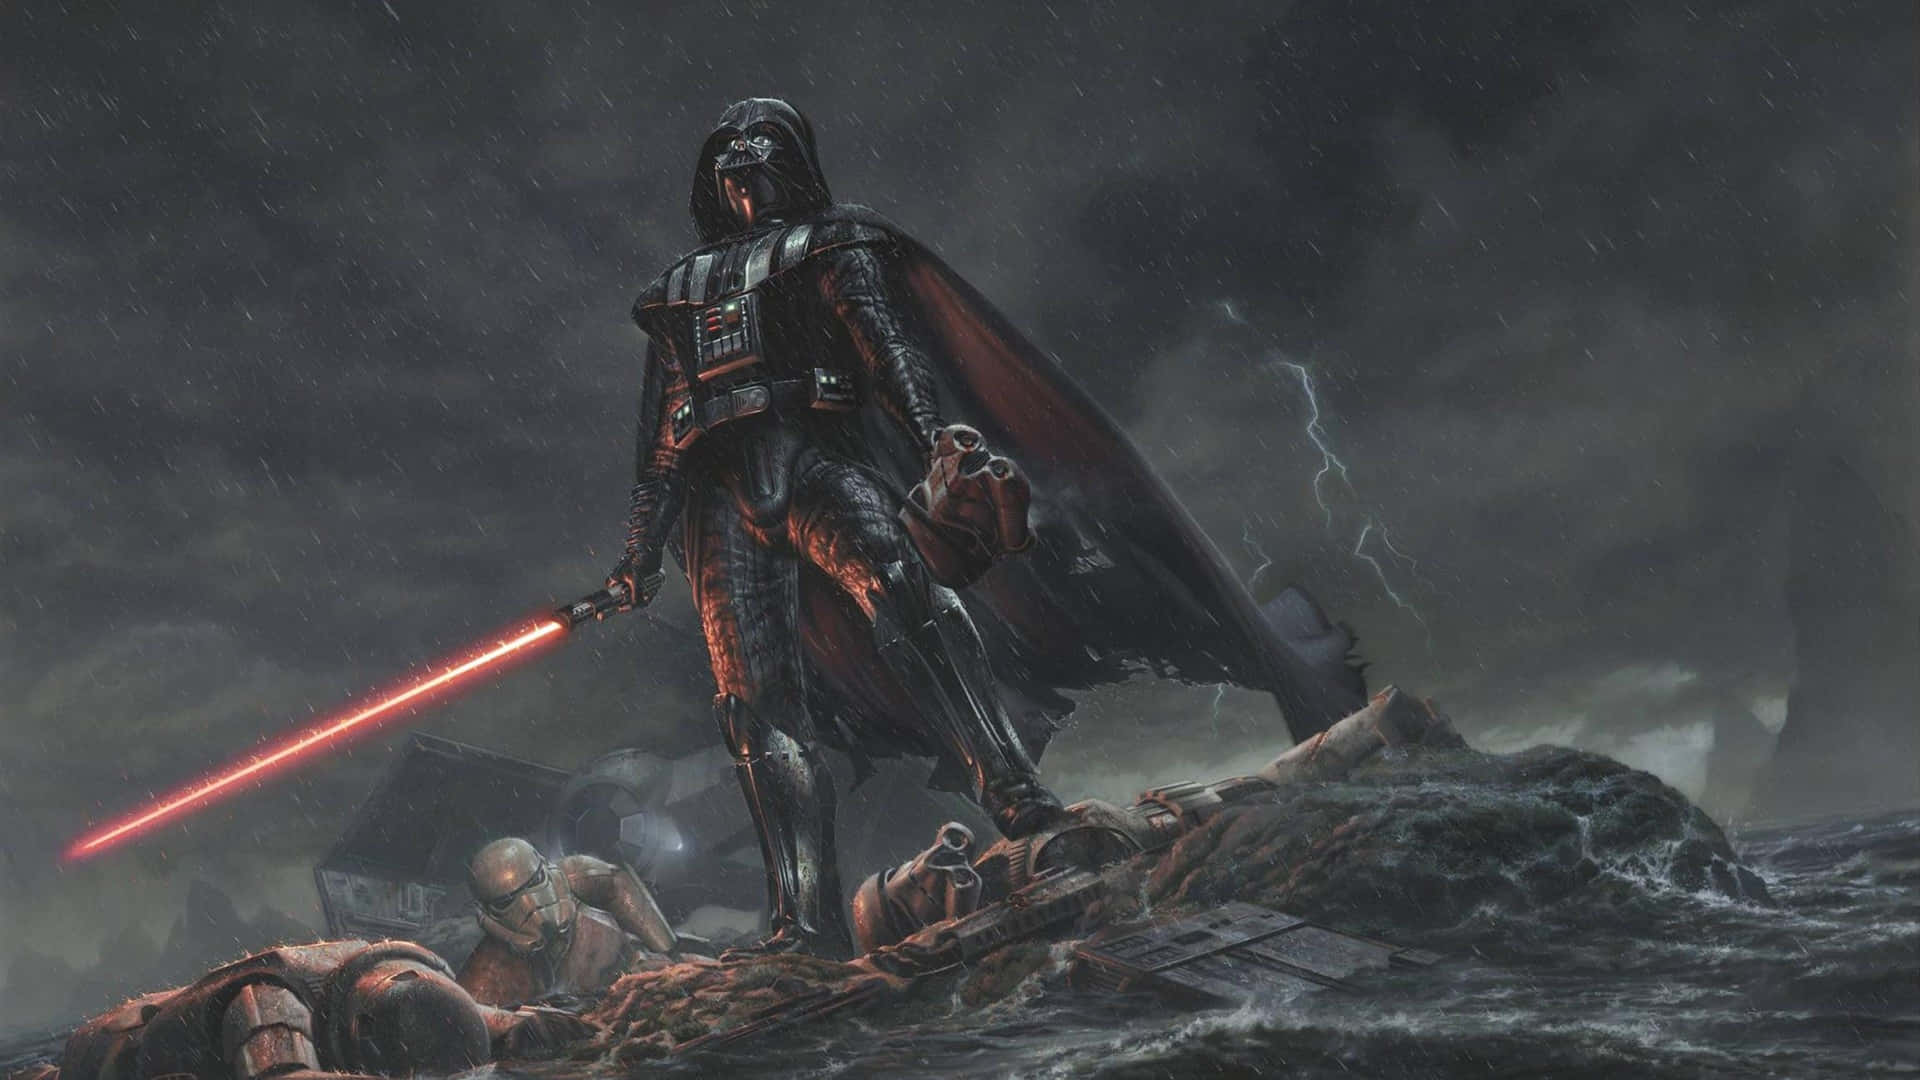 Darth Vader Standing Amongst Wreckage Ultra Wide Wallpaper